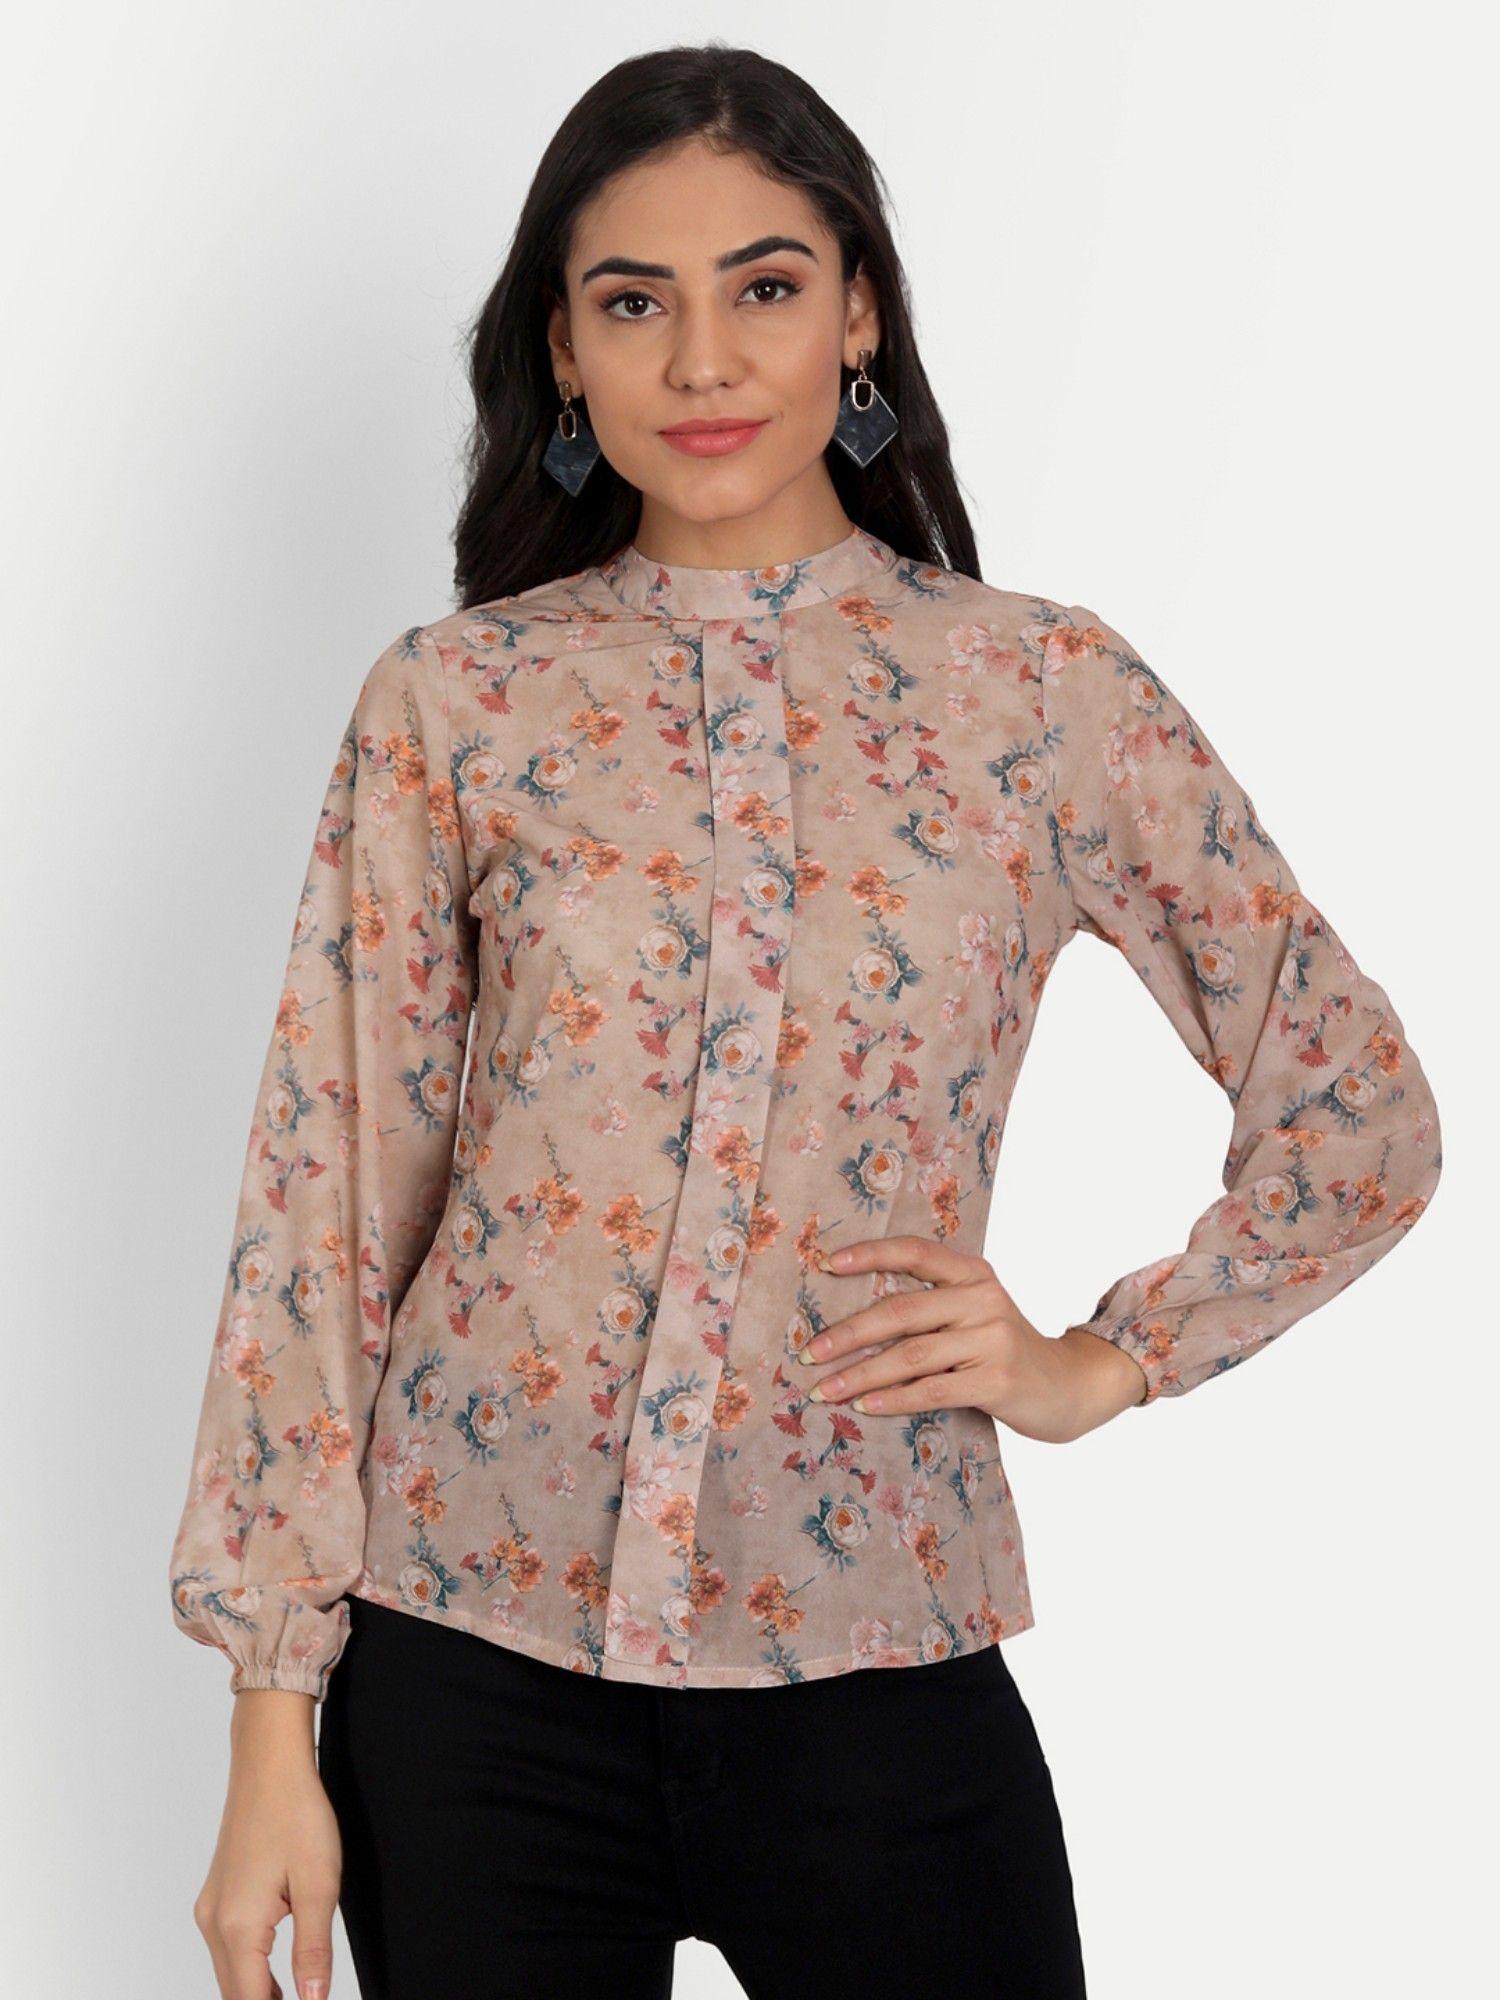 brown floral print mandarin collar georgette shirt style top